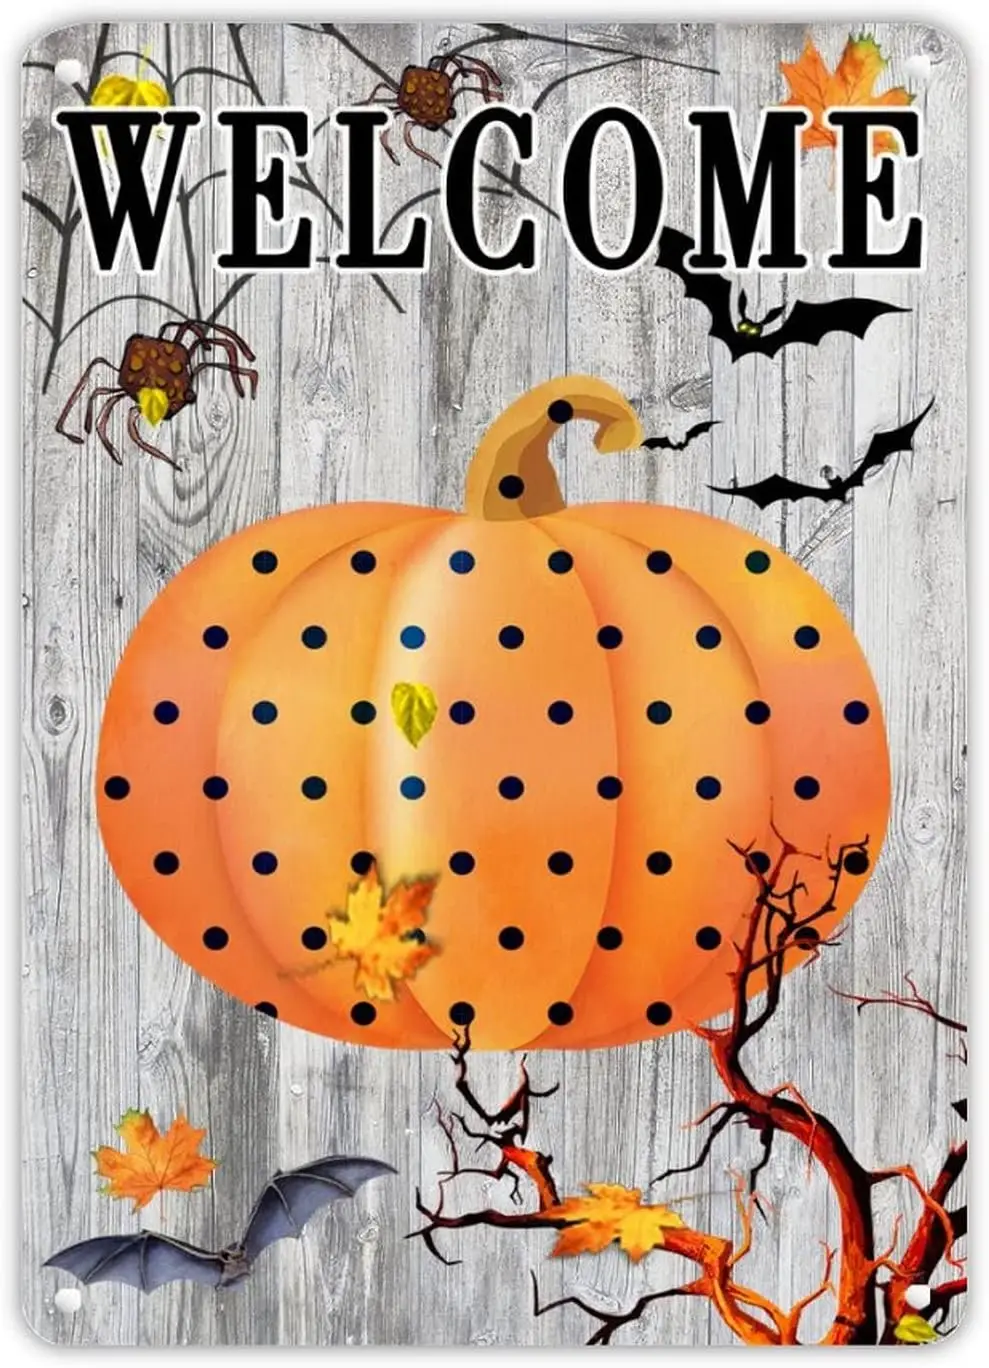 

Halloween Welcome Polka Dots Pumpkin Aluminum Sign Maple Leaves Spider Web Bat Yard Sign Rustic Chic Ghost Haunt Metal